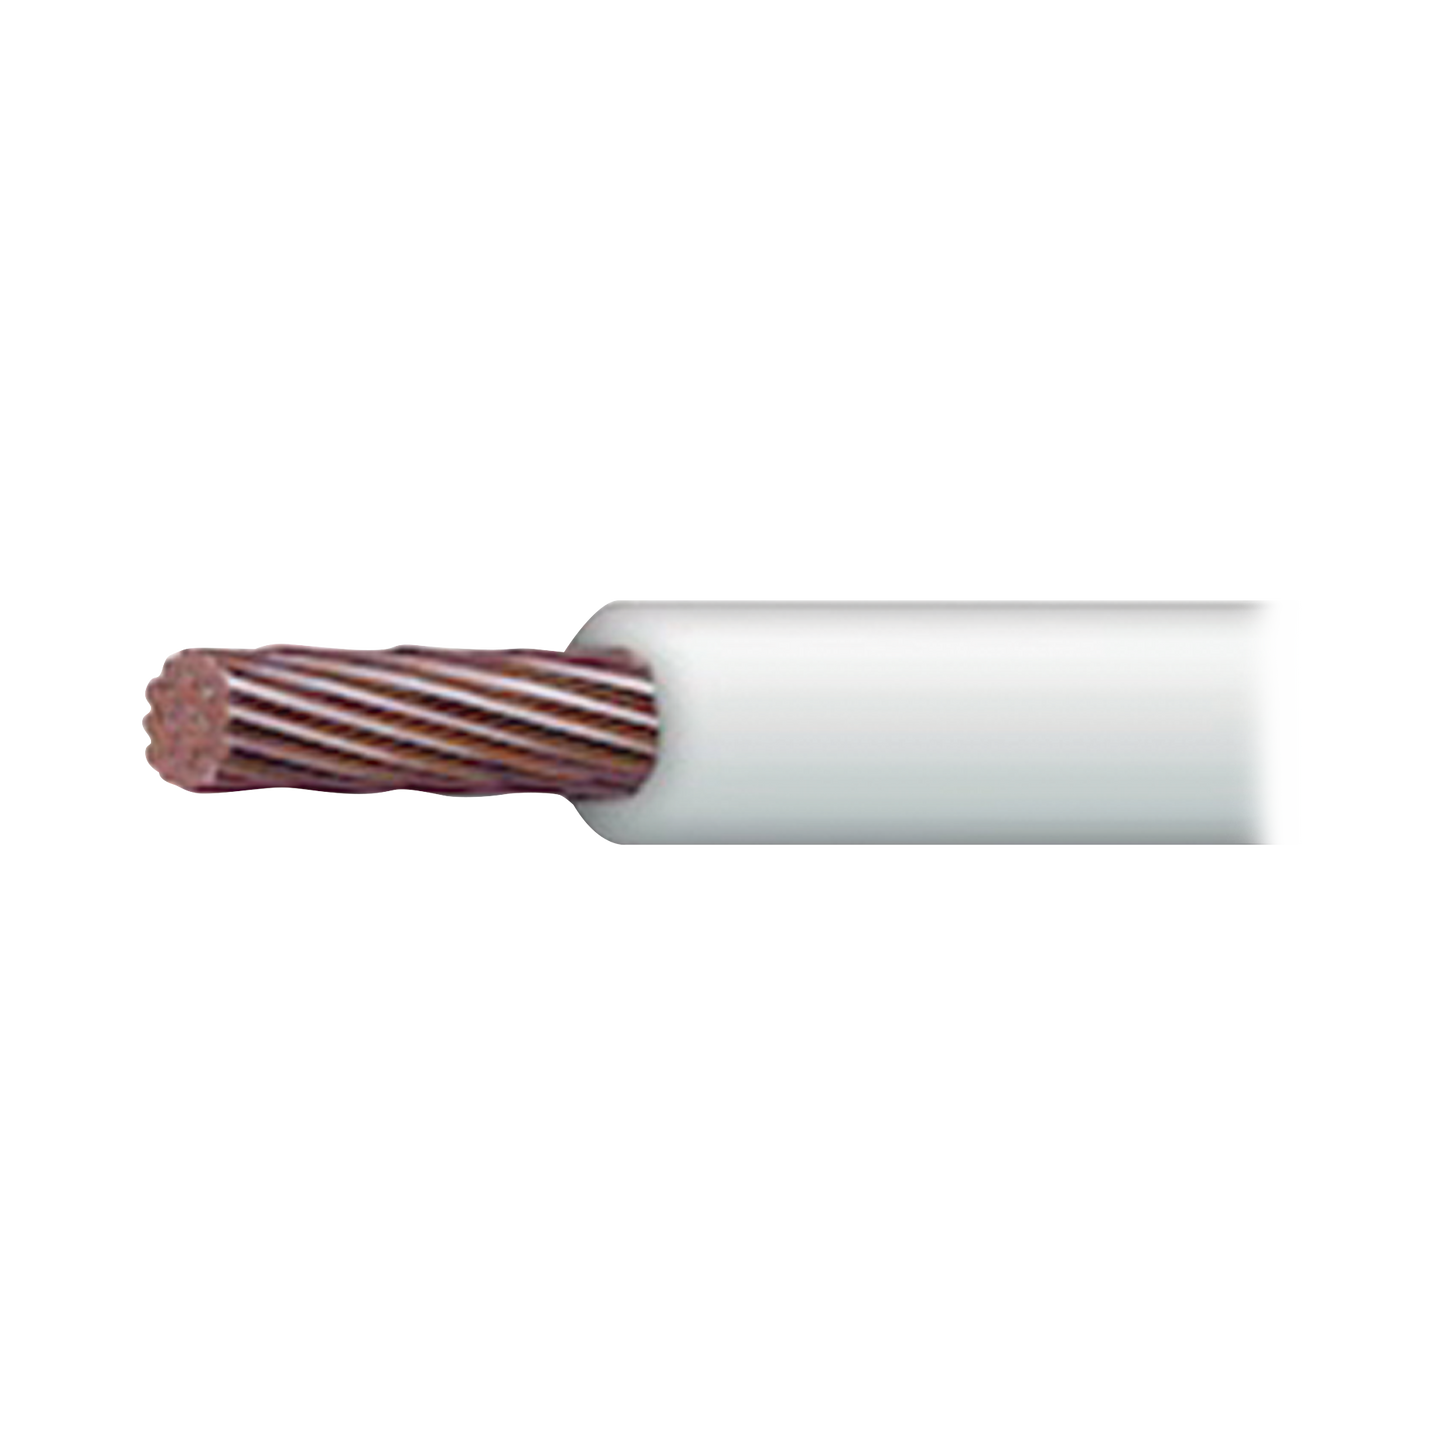 Cable 16 Awg Color Blanco,Conductor De Cobre Suave Cableado. Aislamiento De Pvc, Auto-Extinguible.Bobina De 100 Mts